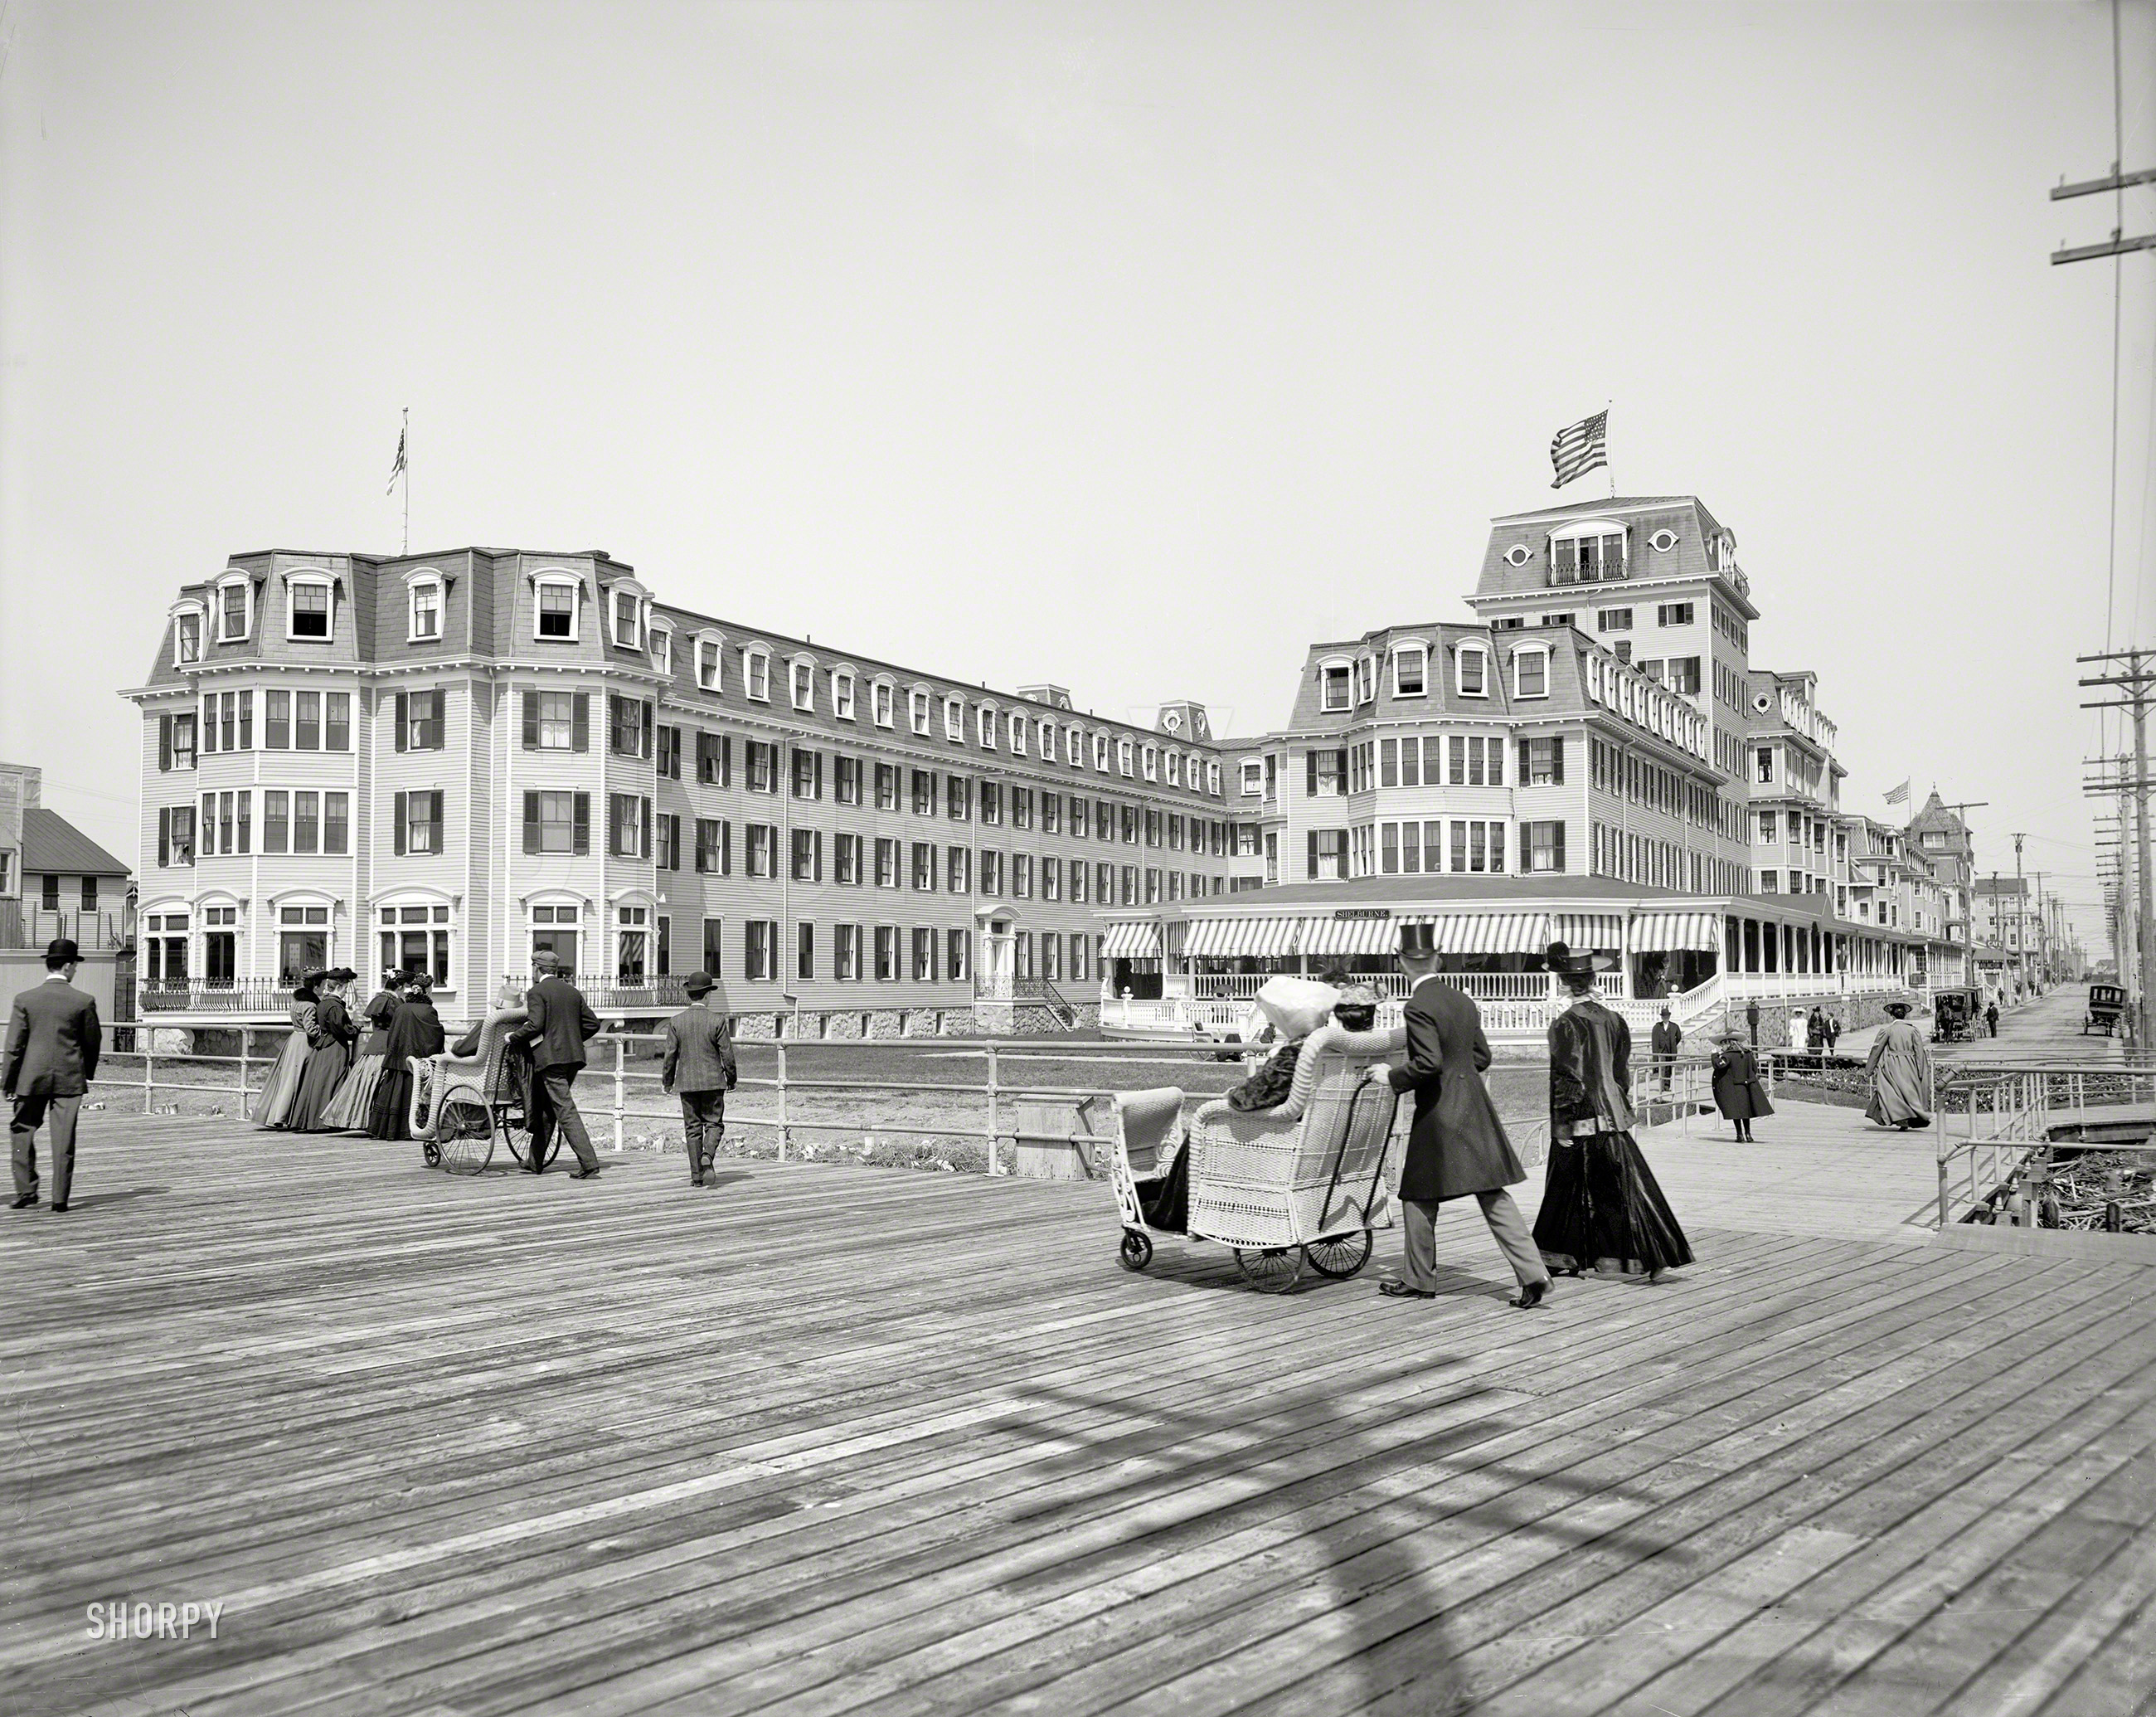 Atlantic City circa 1905. "The Shelburne, Michigan Avenue at Boardwalk." 8x10 inch dry plate glass negative, Detroit Publishing Company. View full size.